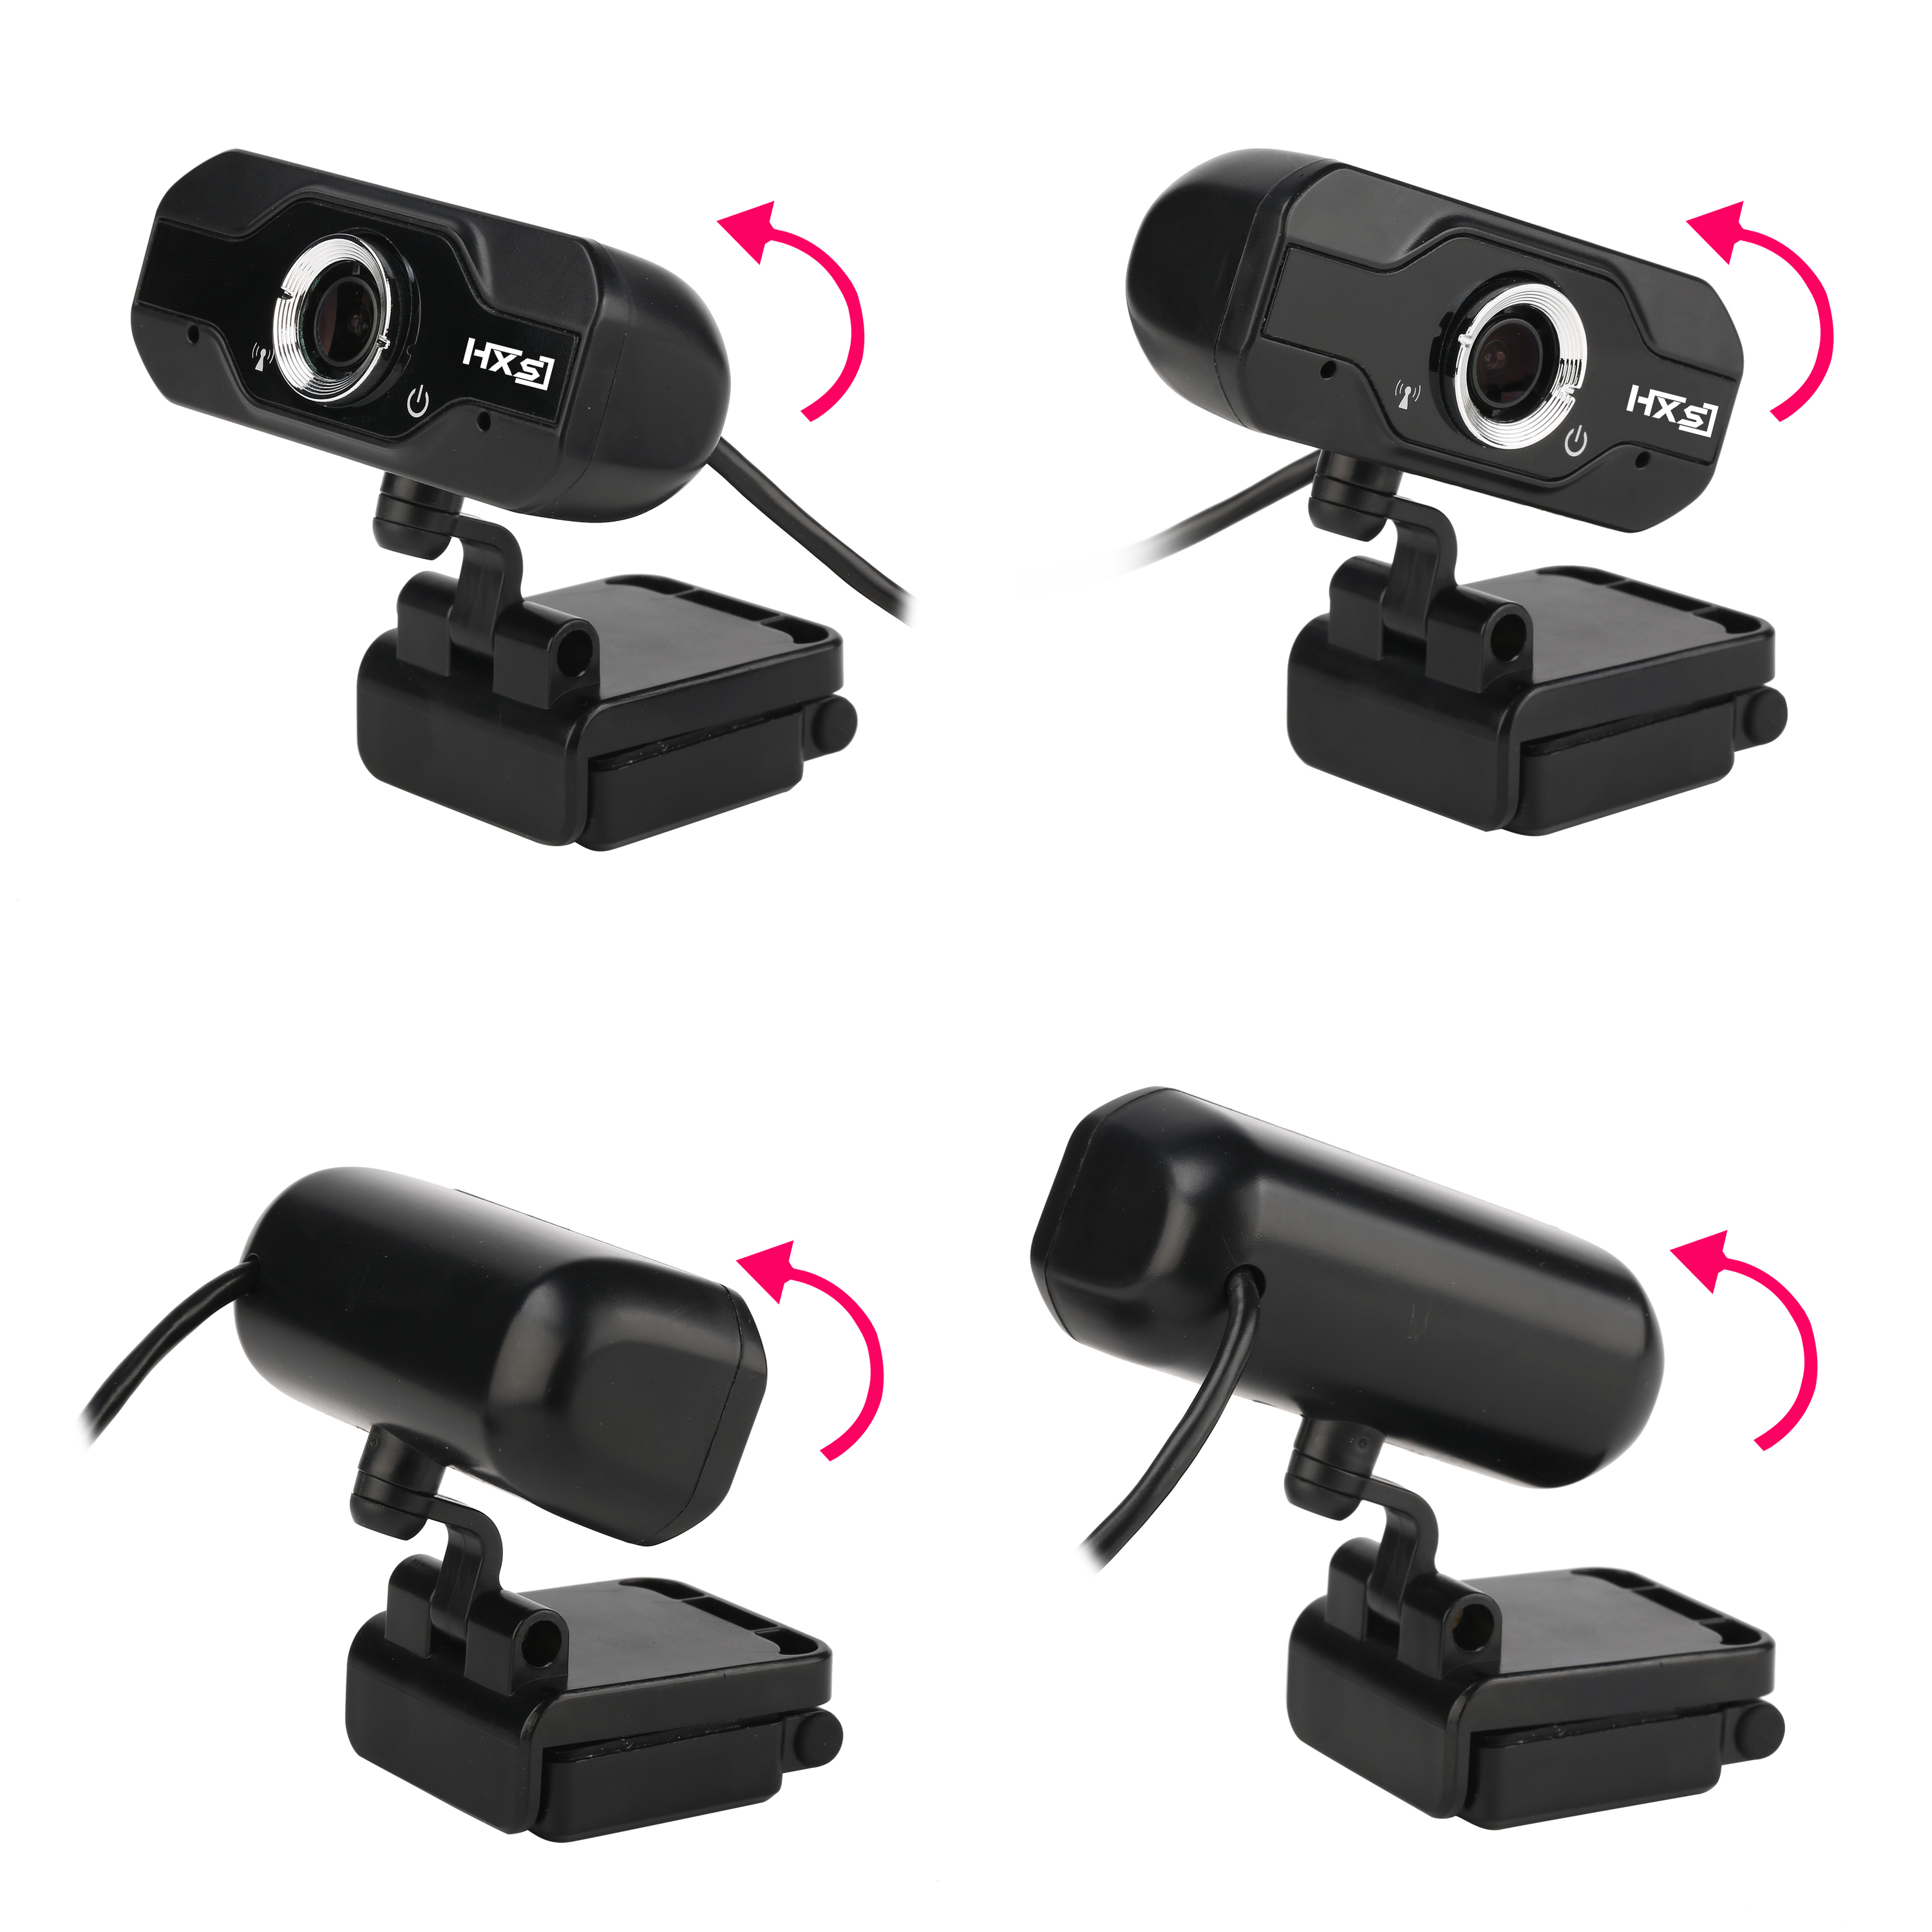 HXSJ-HD-720P-CMOS-Sensor-Webcam-Built-in-Microphone-Adjustable-Angle-for-Laptop-Desktop-1161811